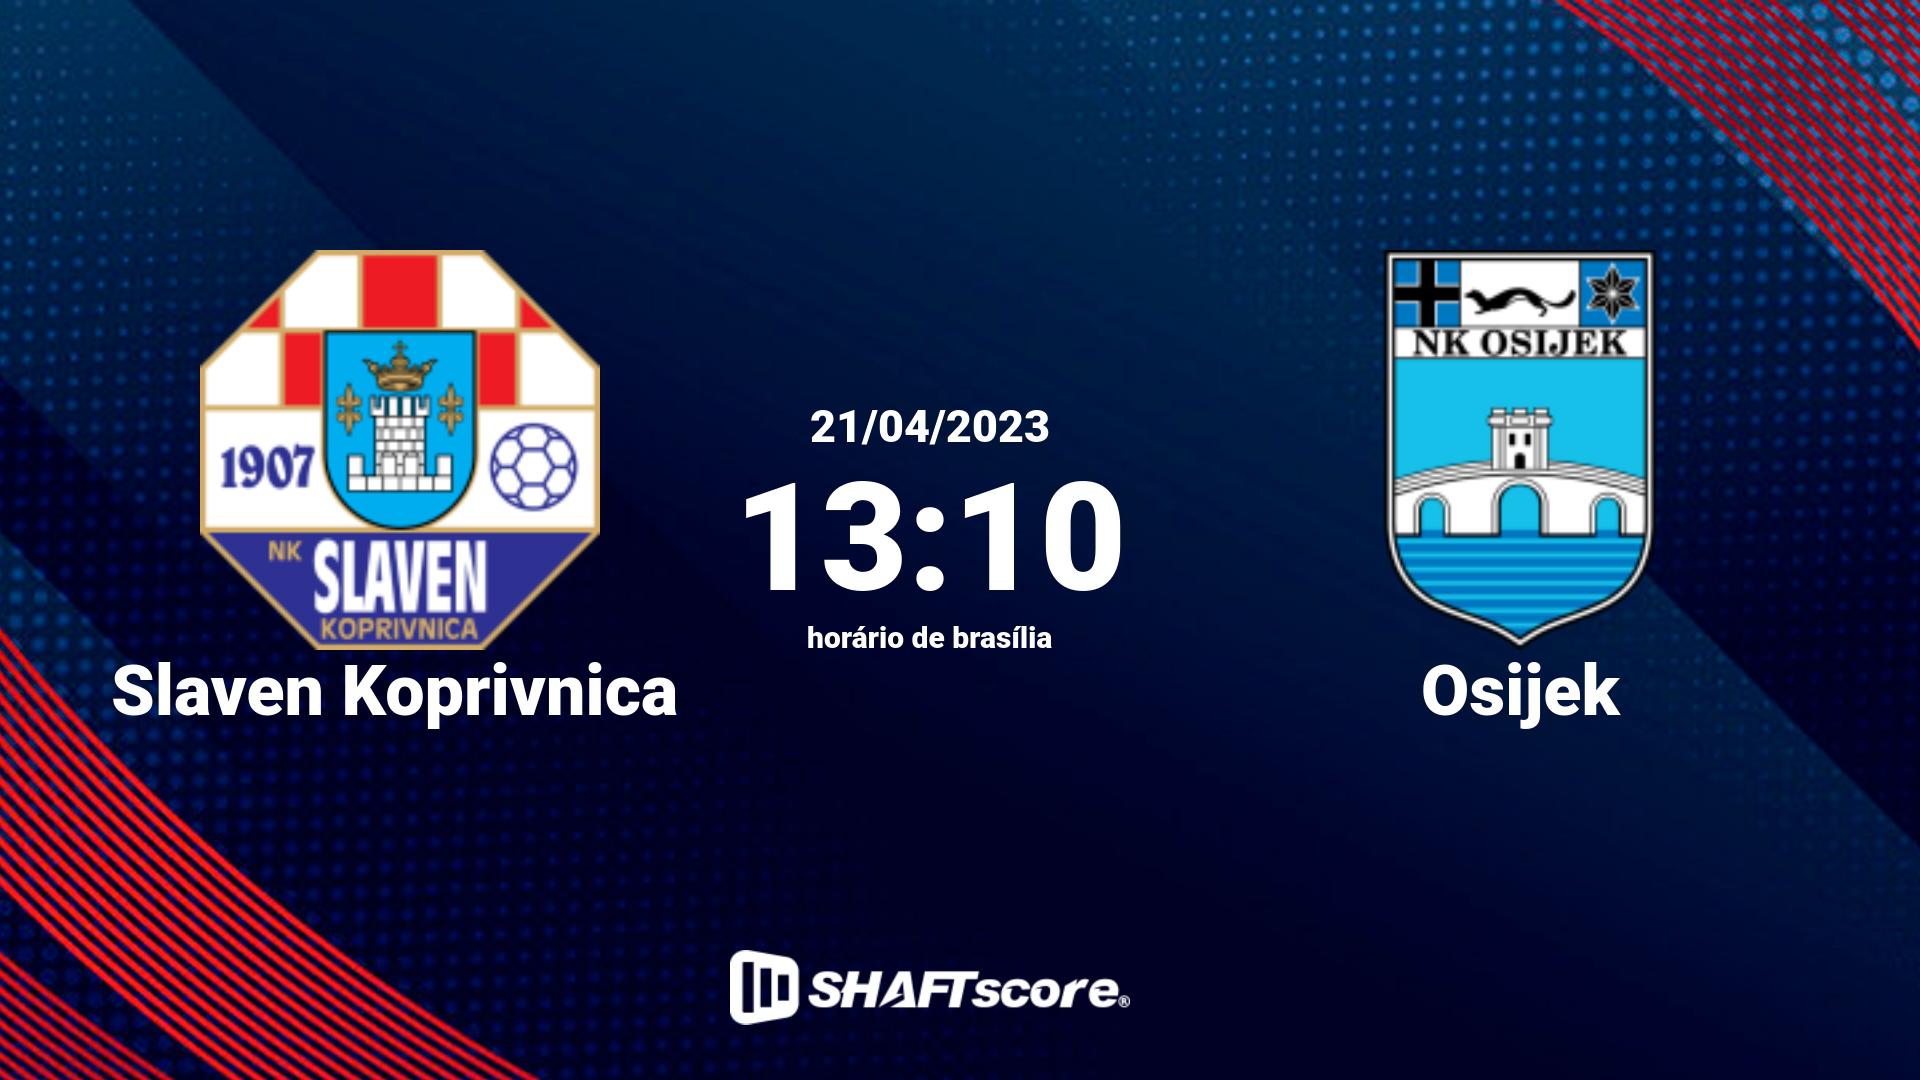 Estatísticas do jogo Slaven Koprivnica vs Osijek 21.04 13:10